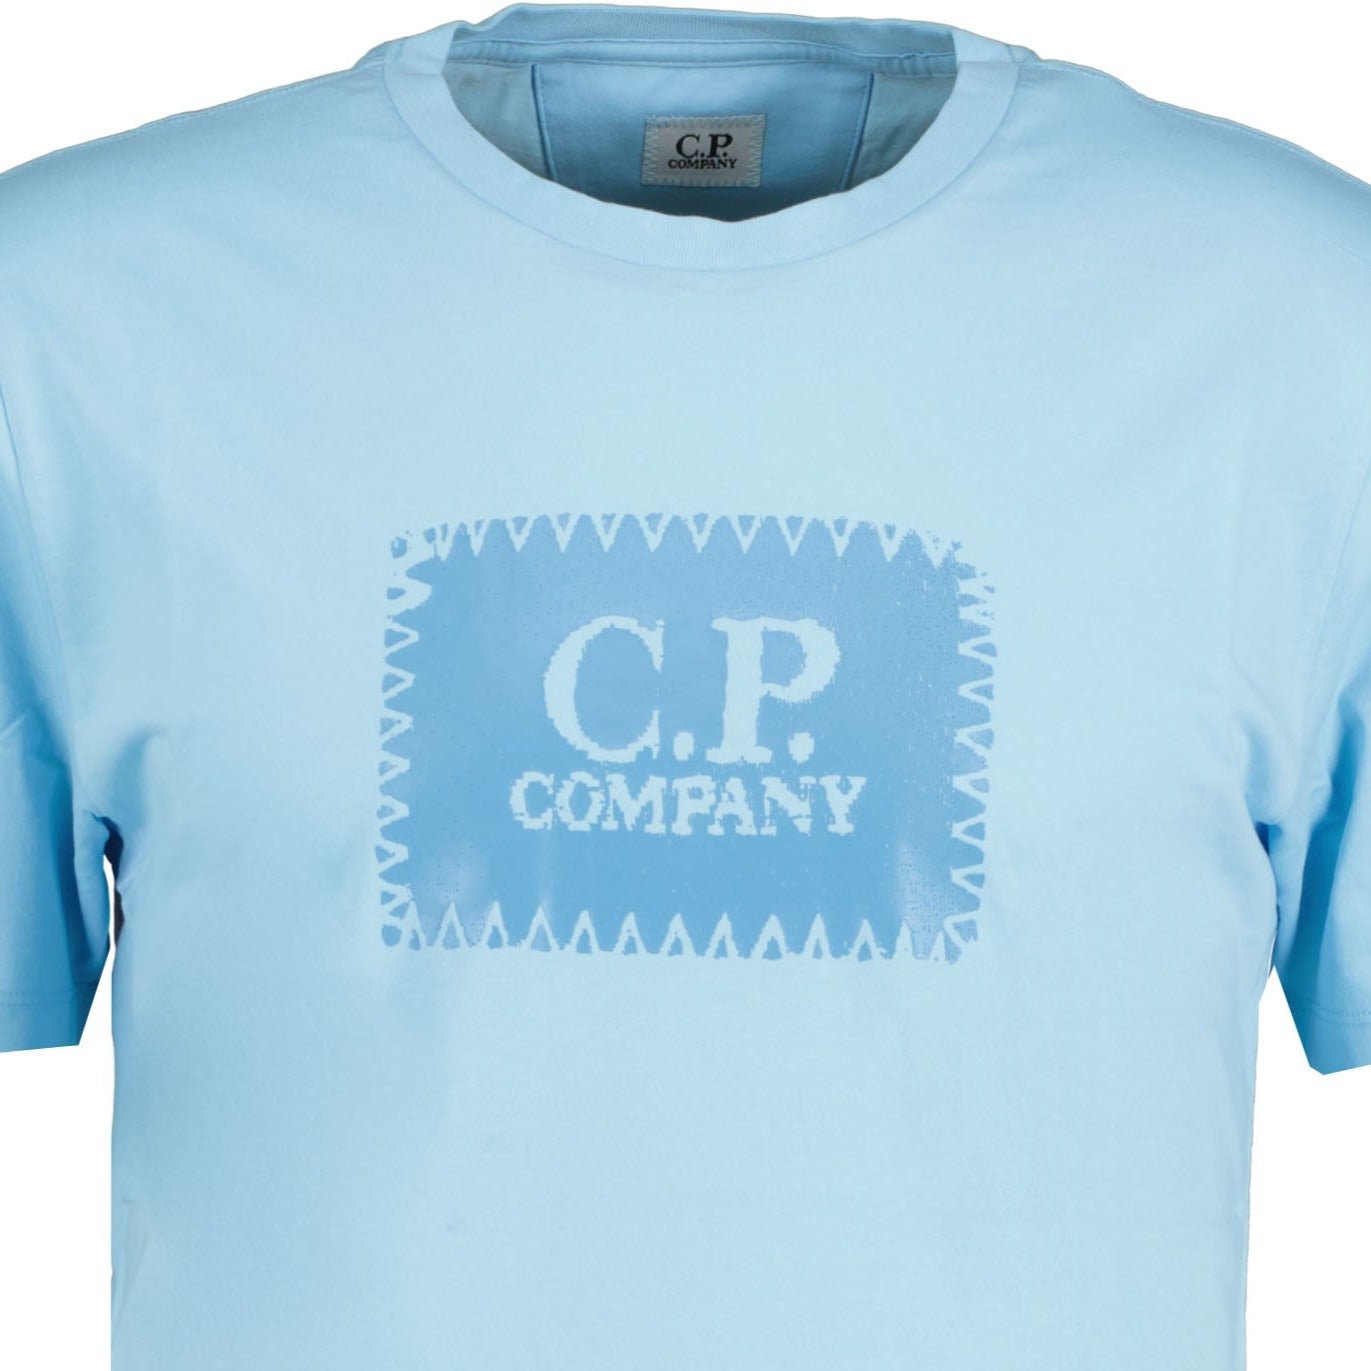 CP Company Stitch Print T-Shirt Blue - chancefashionco